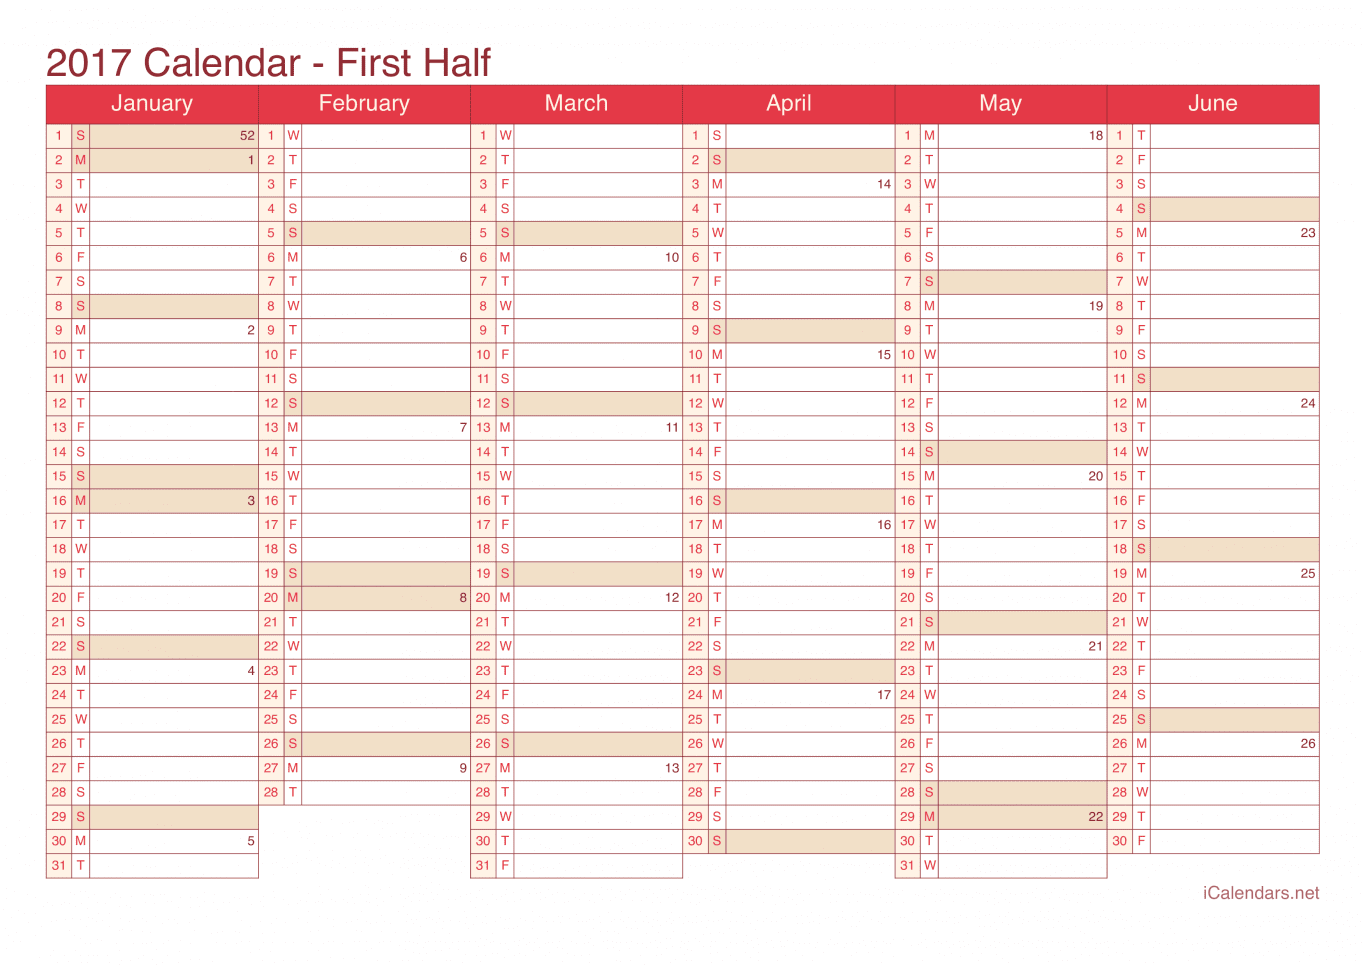 2017 Half year calendar with week numbers - Cherry